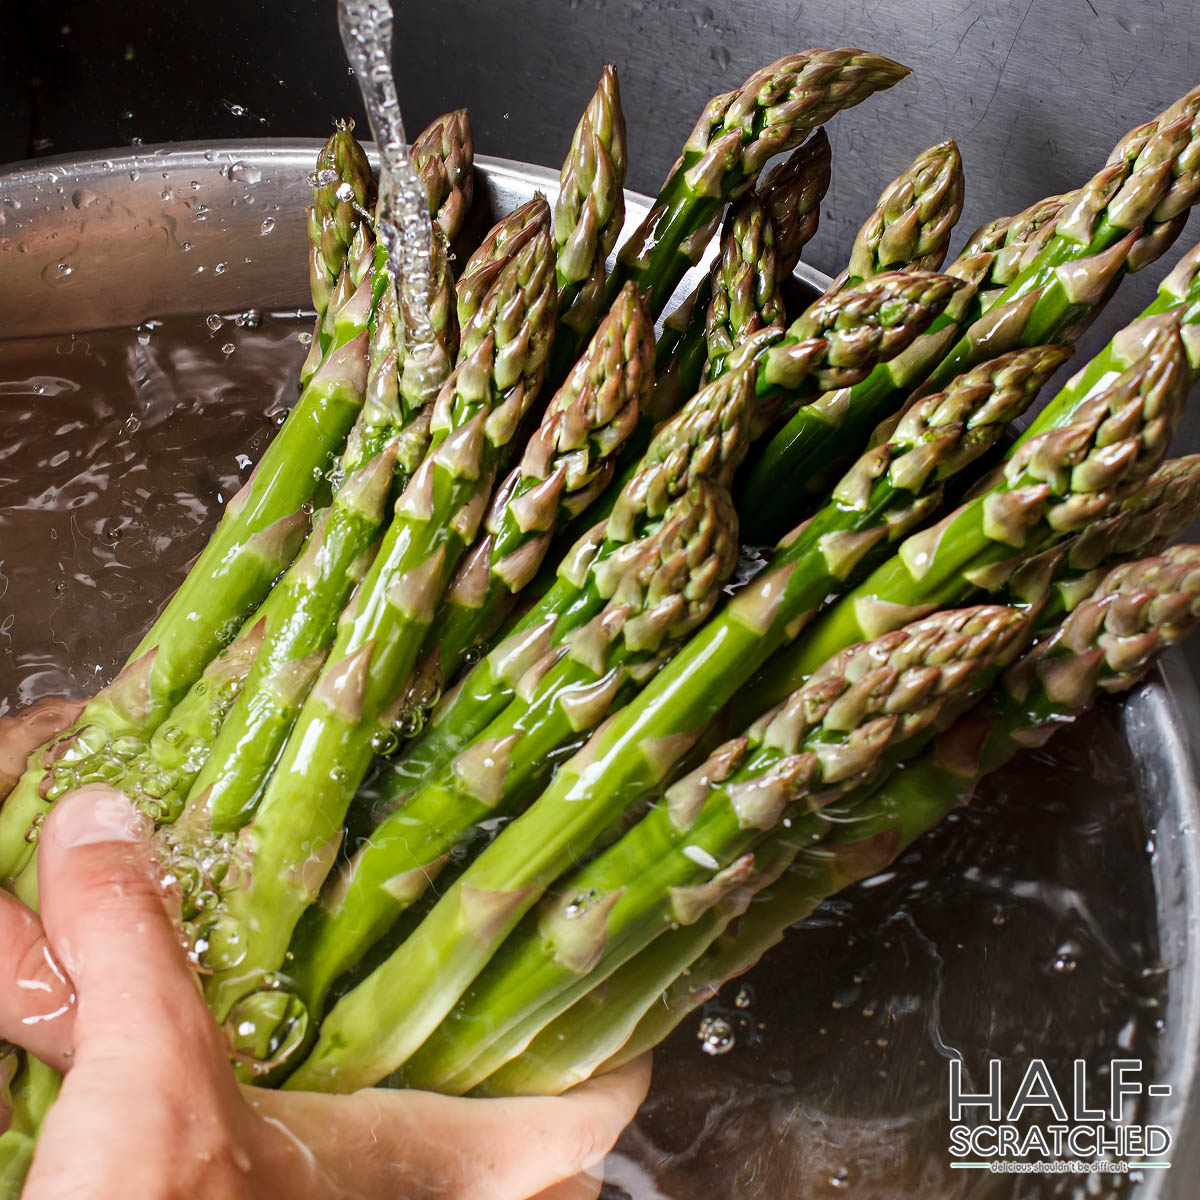 Washing asparagus